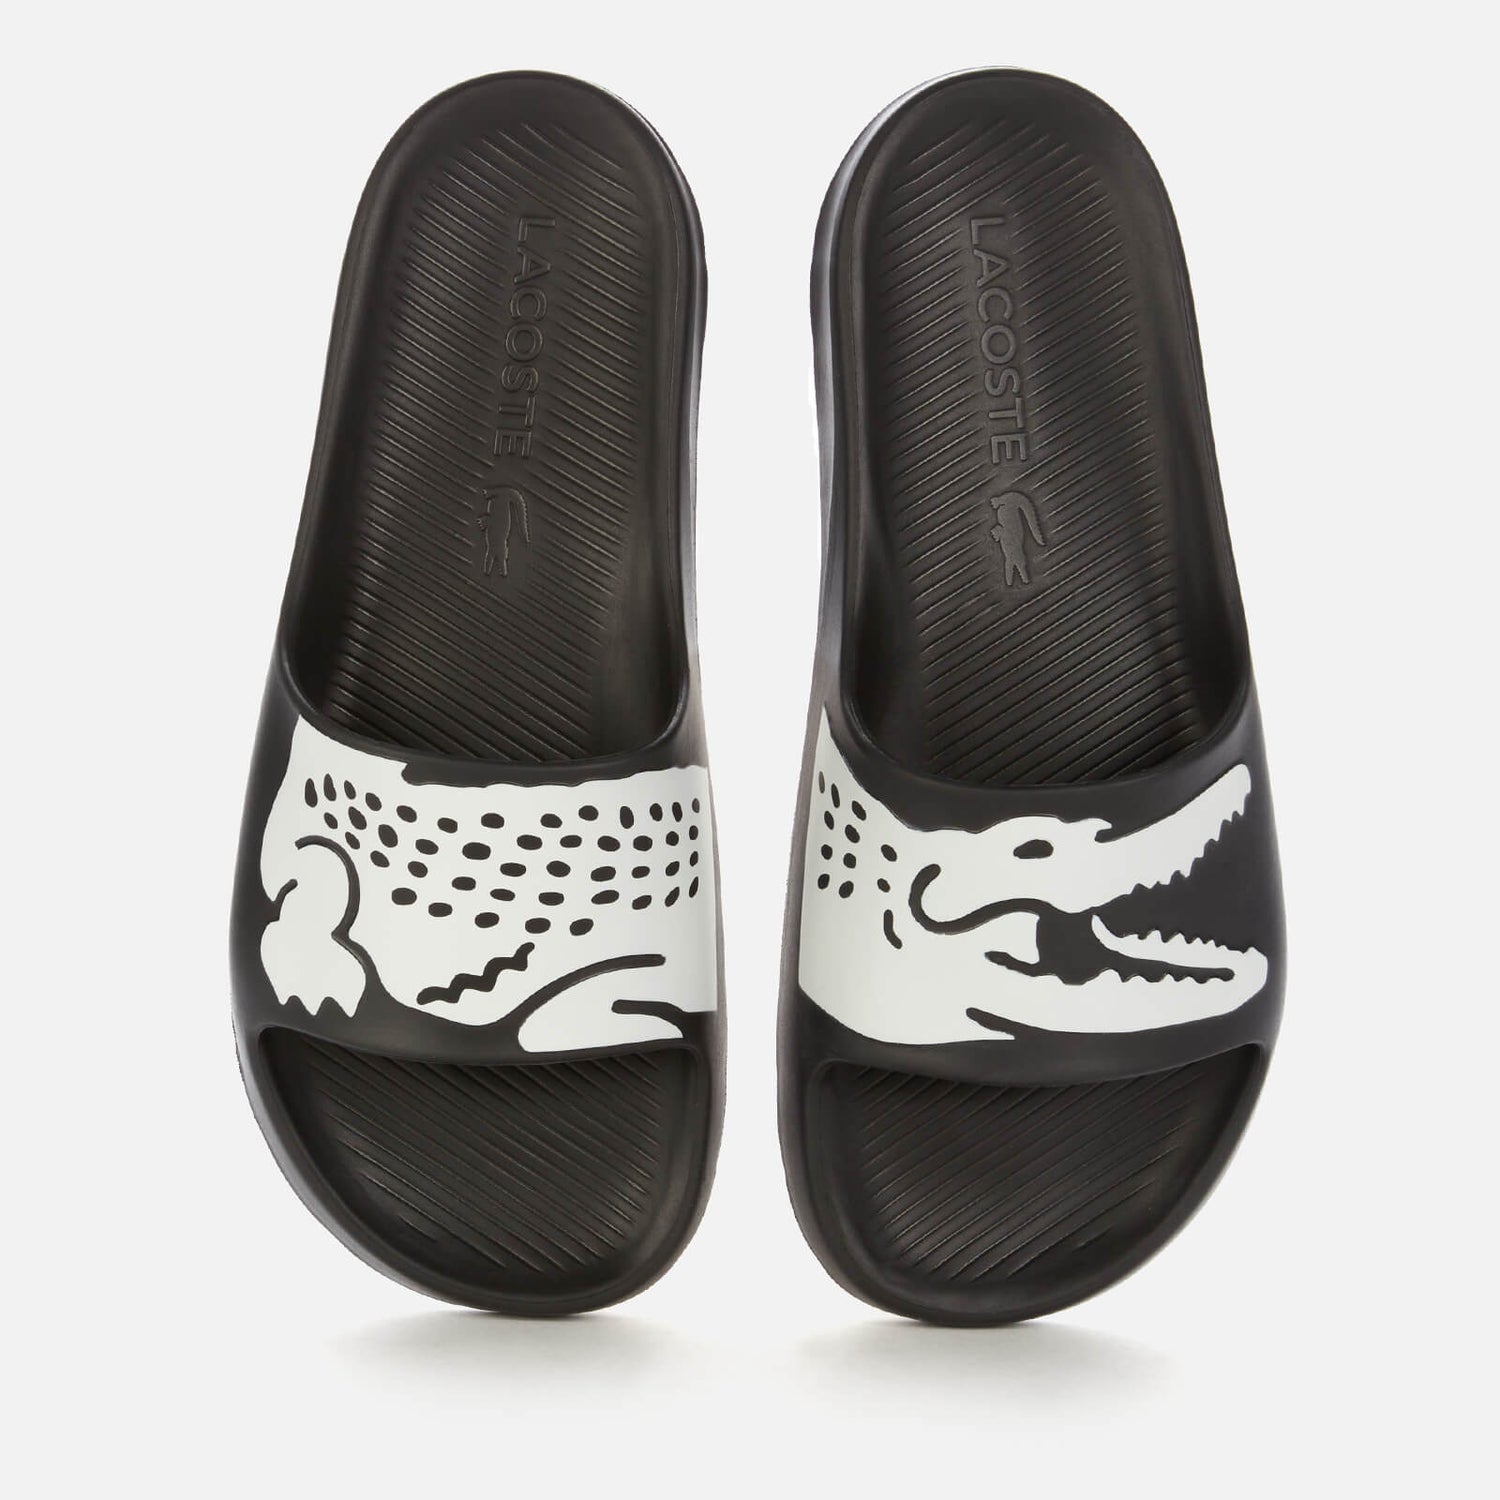 Lacoste Men's Croco 2.0 0721 2 Slide Sandals - Black/White